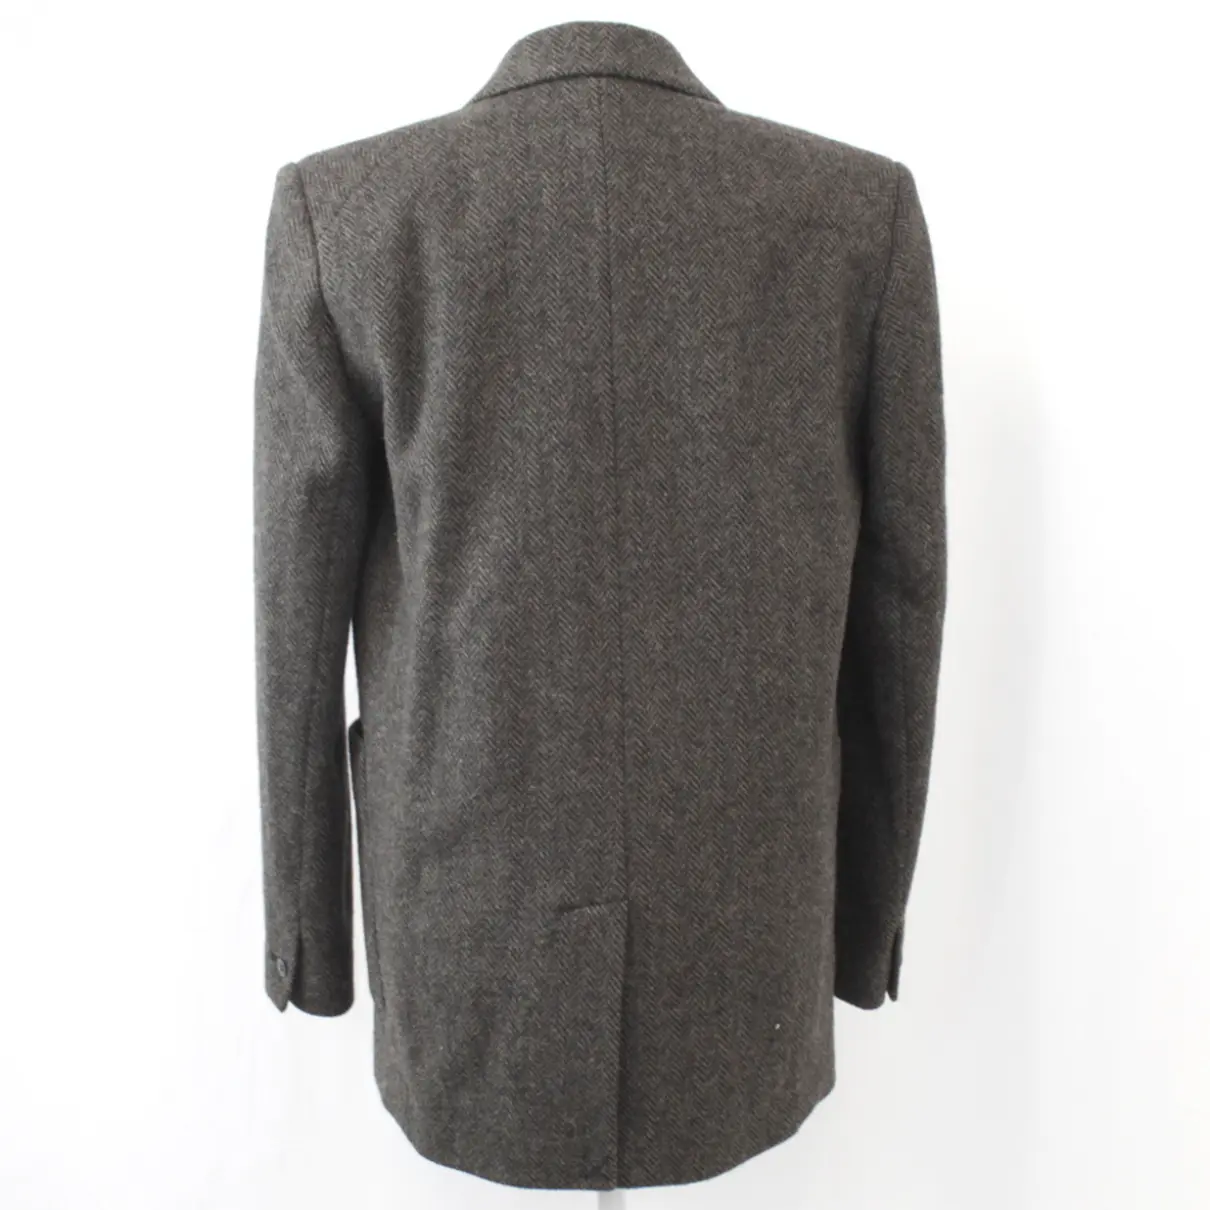 Buy Ba&sh Wool jacket online